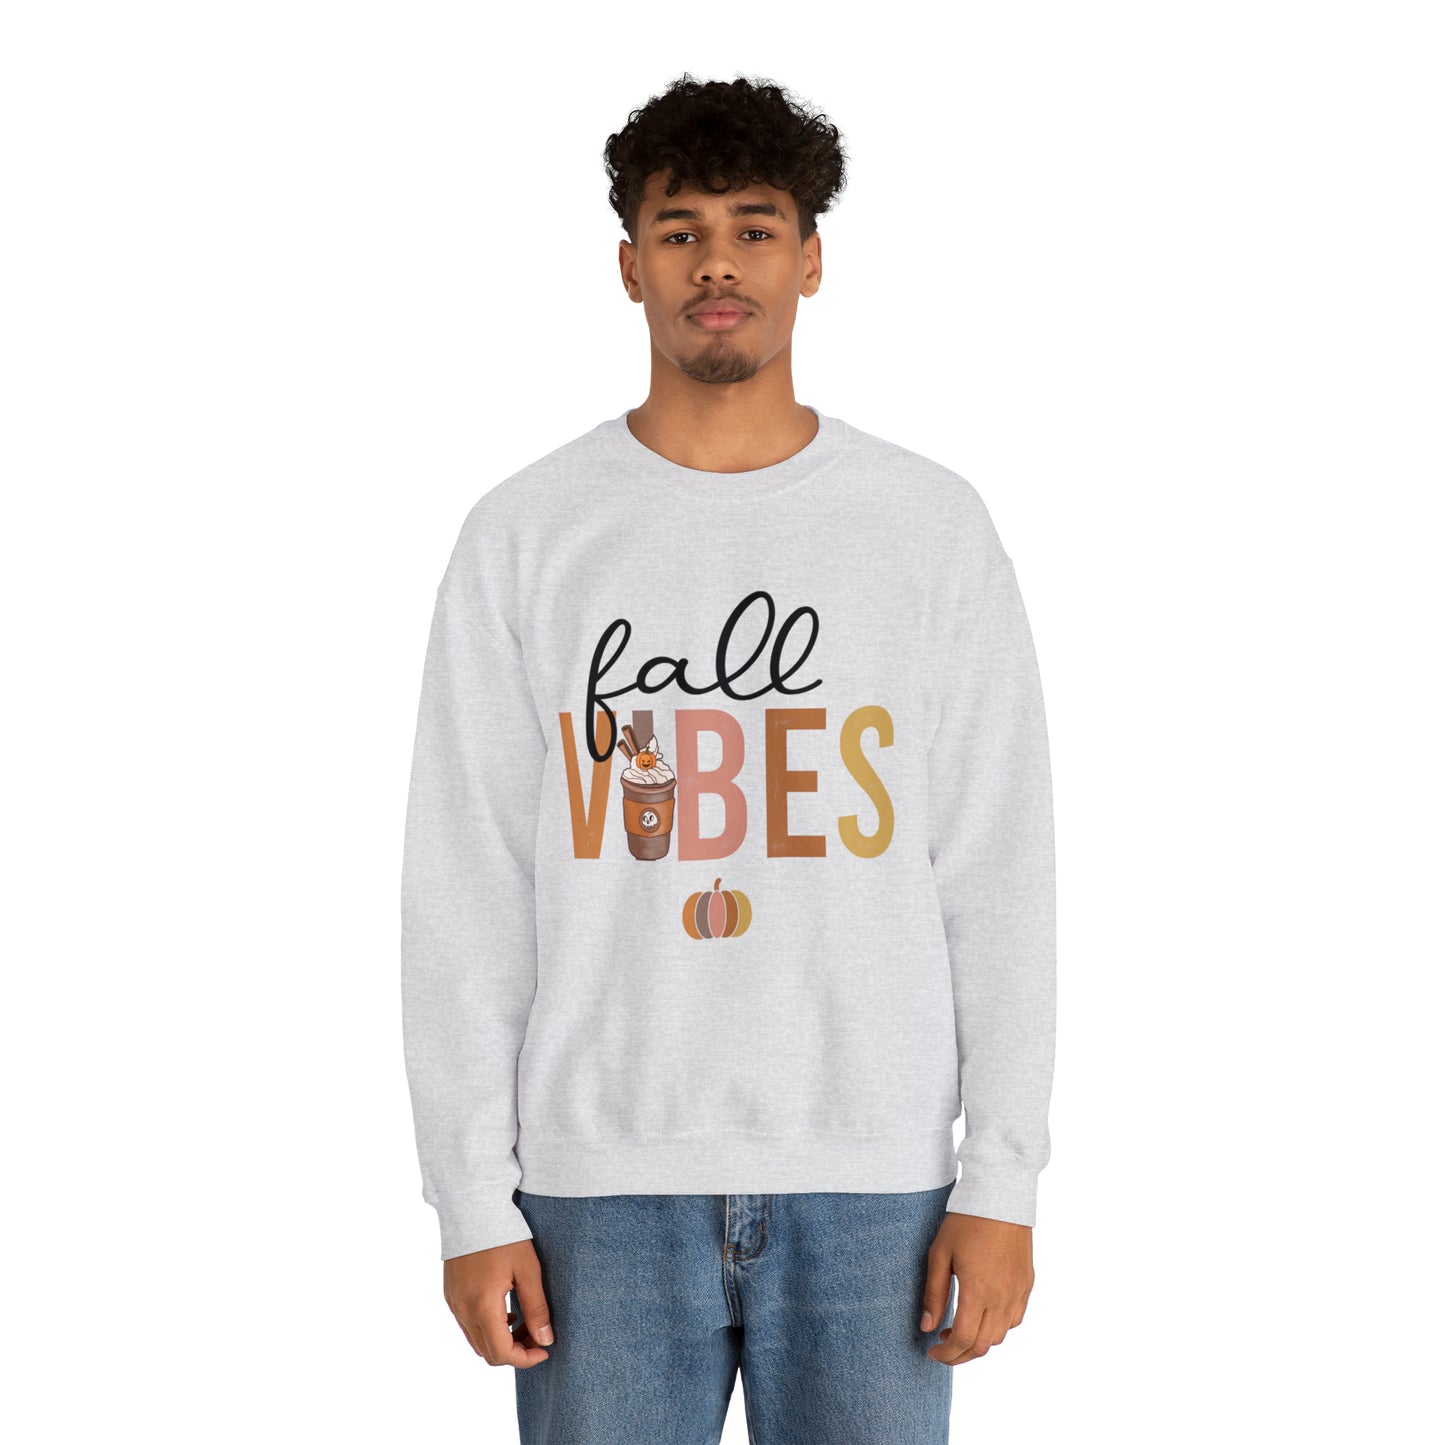 Fall Vibes Crewneck Sweatshirt